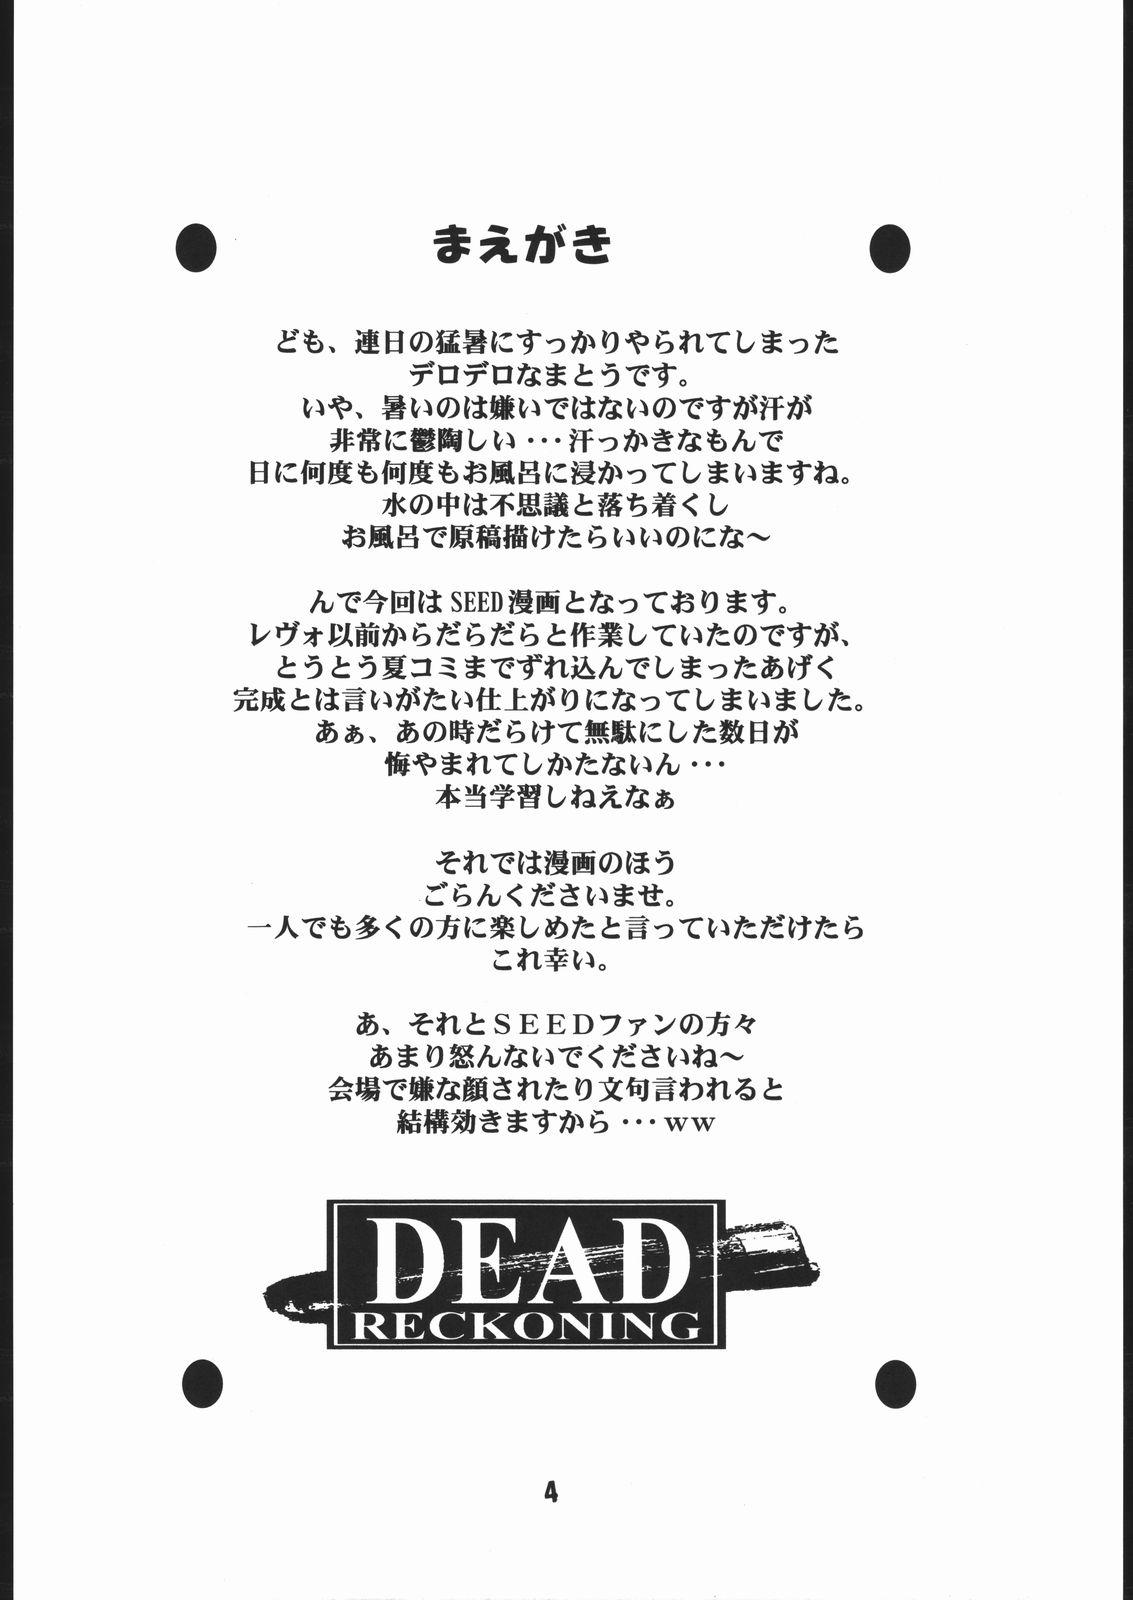 Mallu Dead Reckoning - Gundam seed All Natural - Page 3